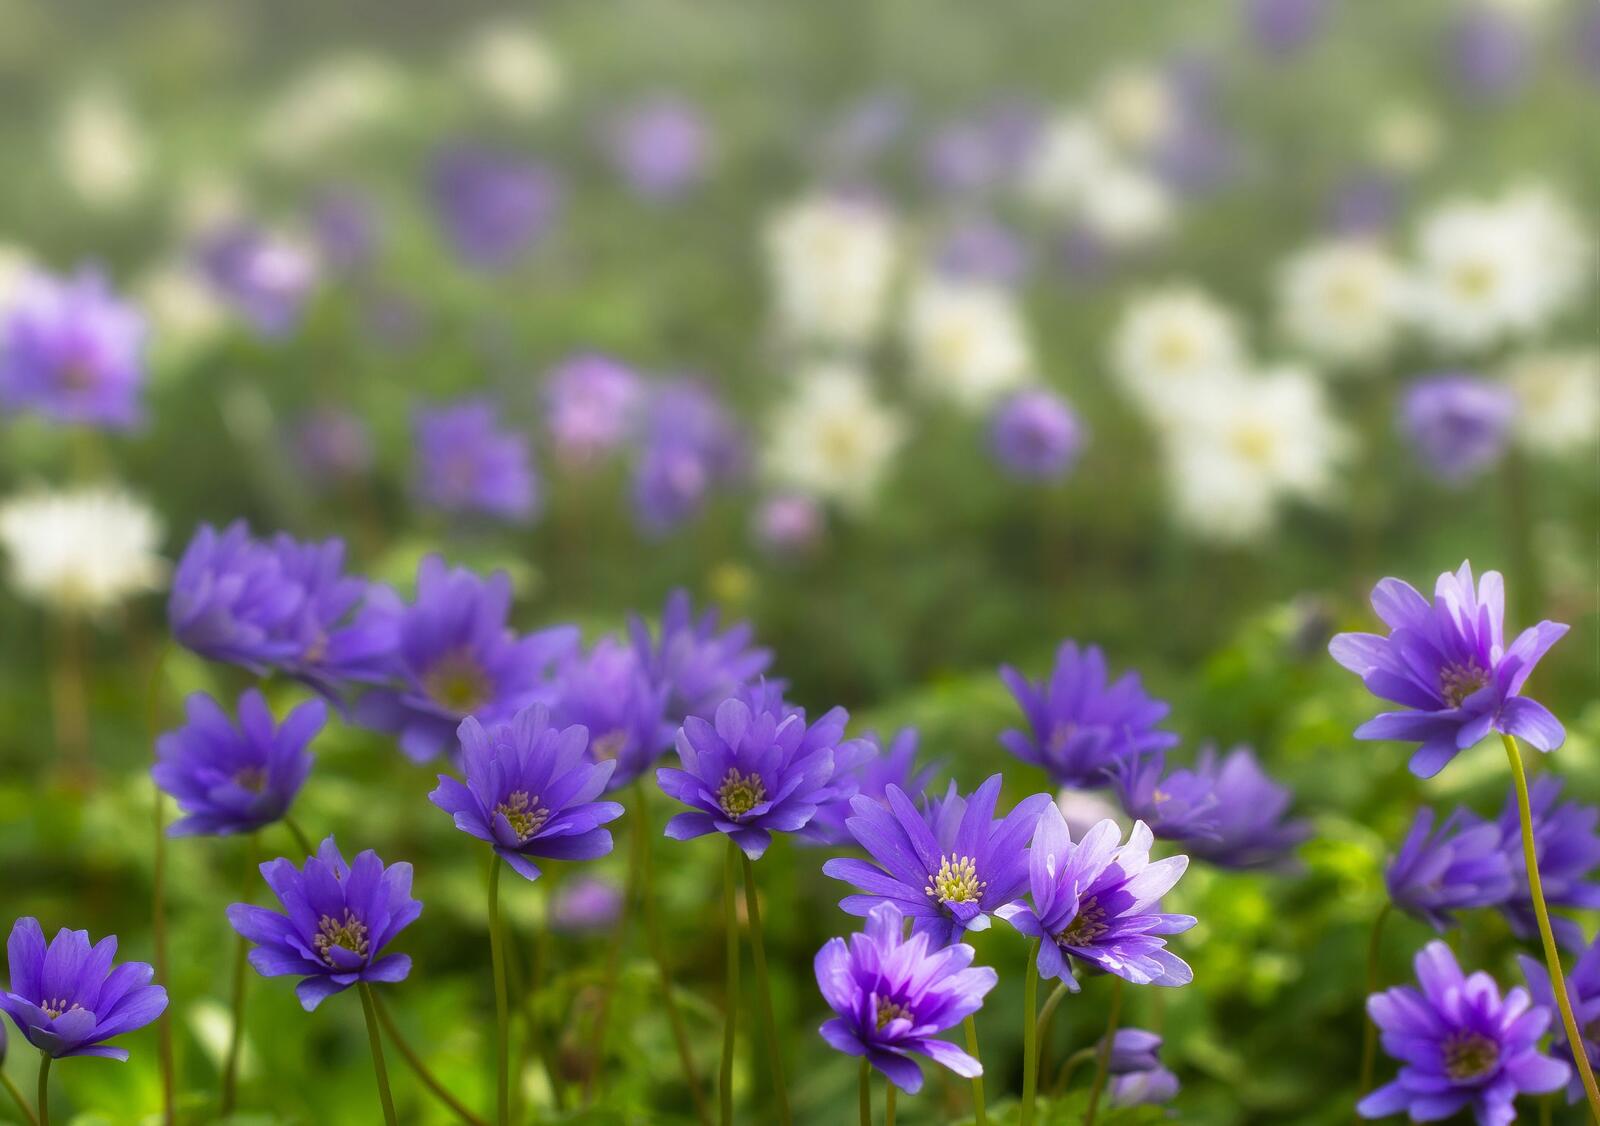 Wallpapers blurred purple flowers wallpaper anemone on the desktop